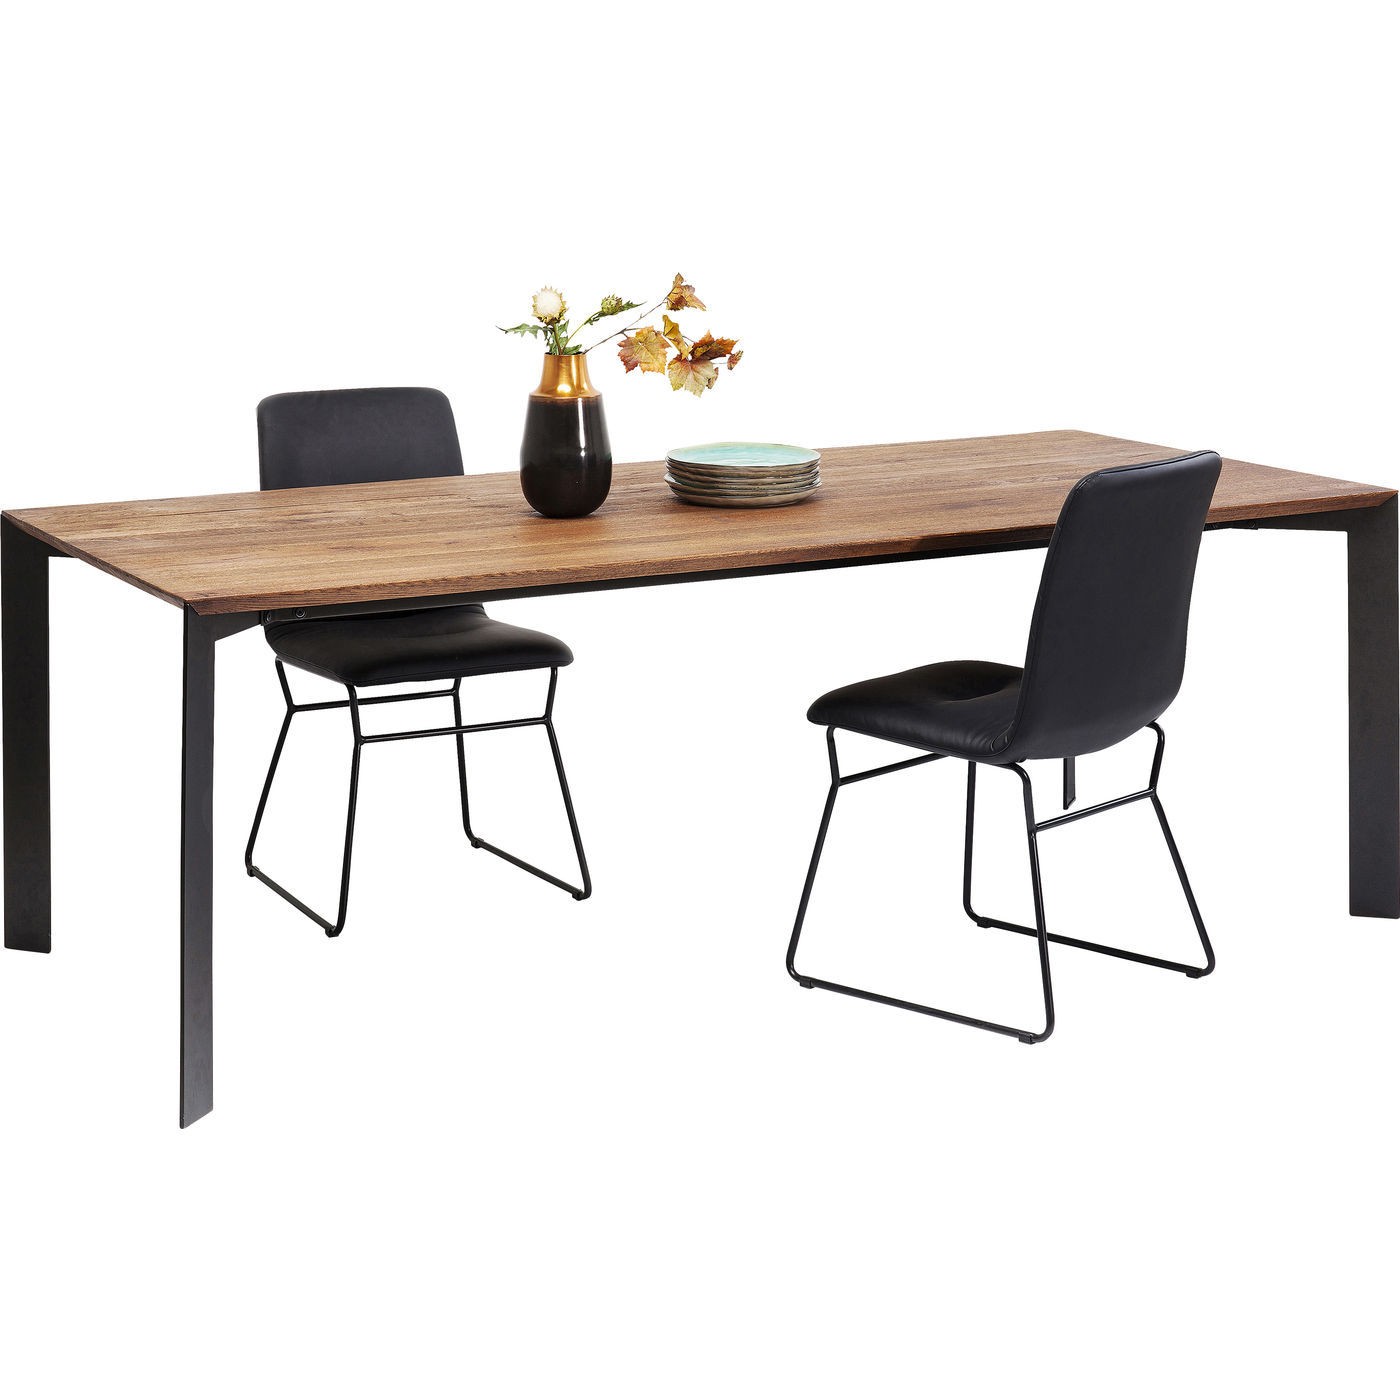 Table Phoenix 220x100cm Kare Design